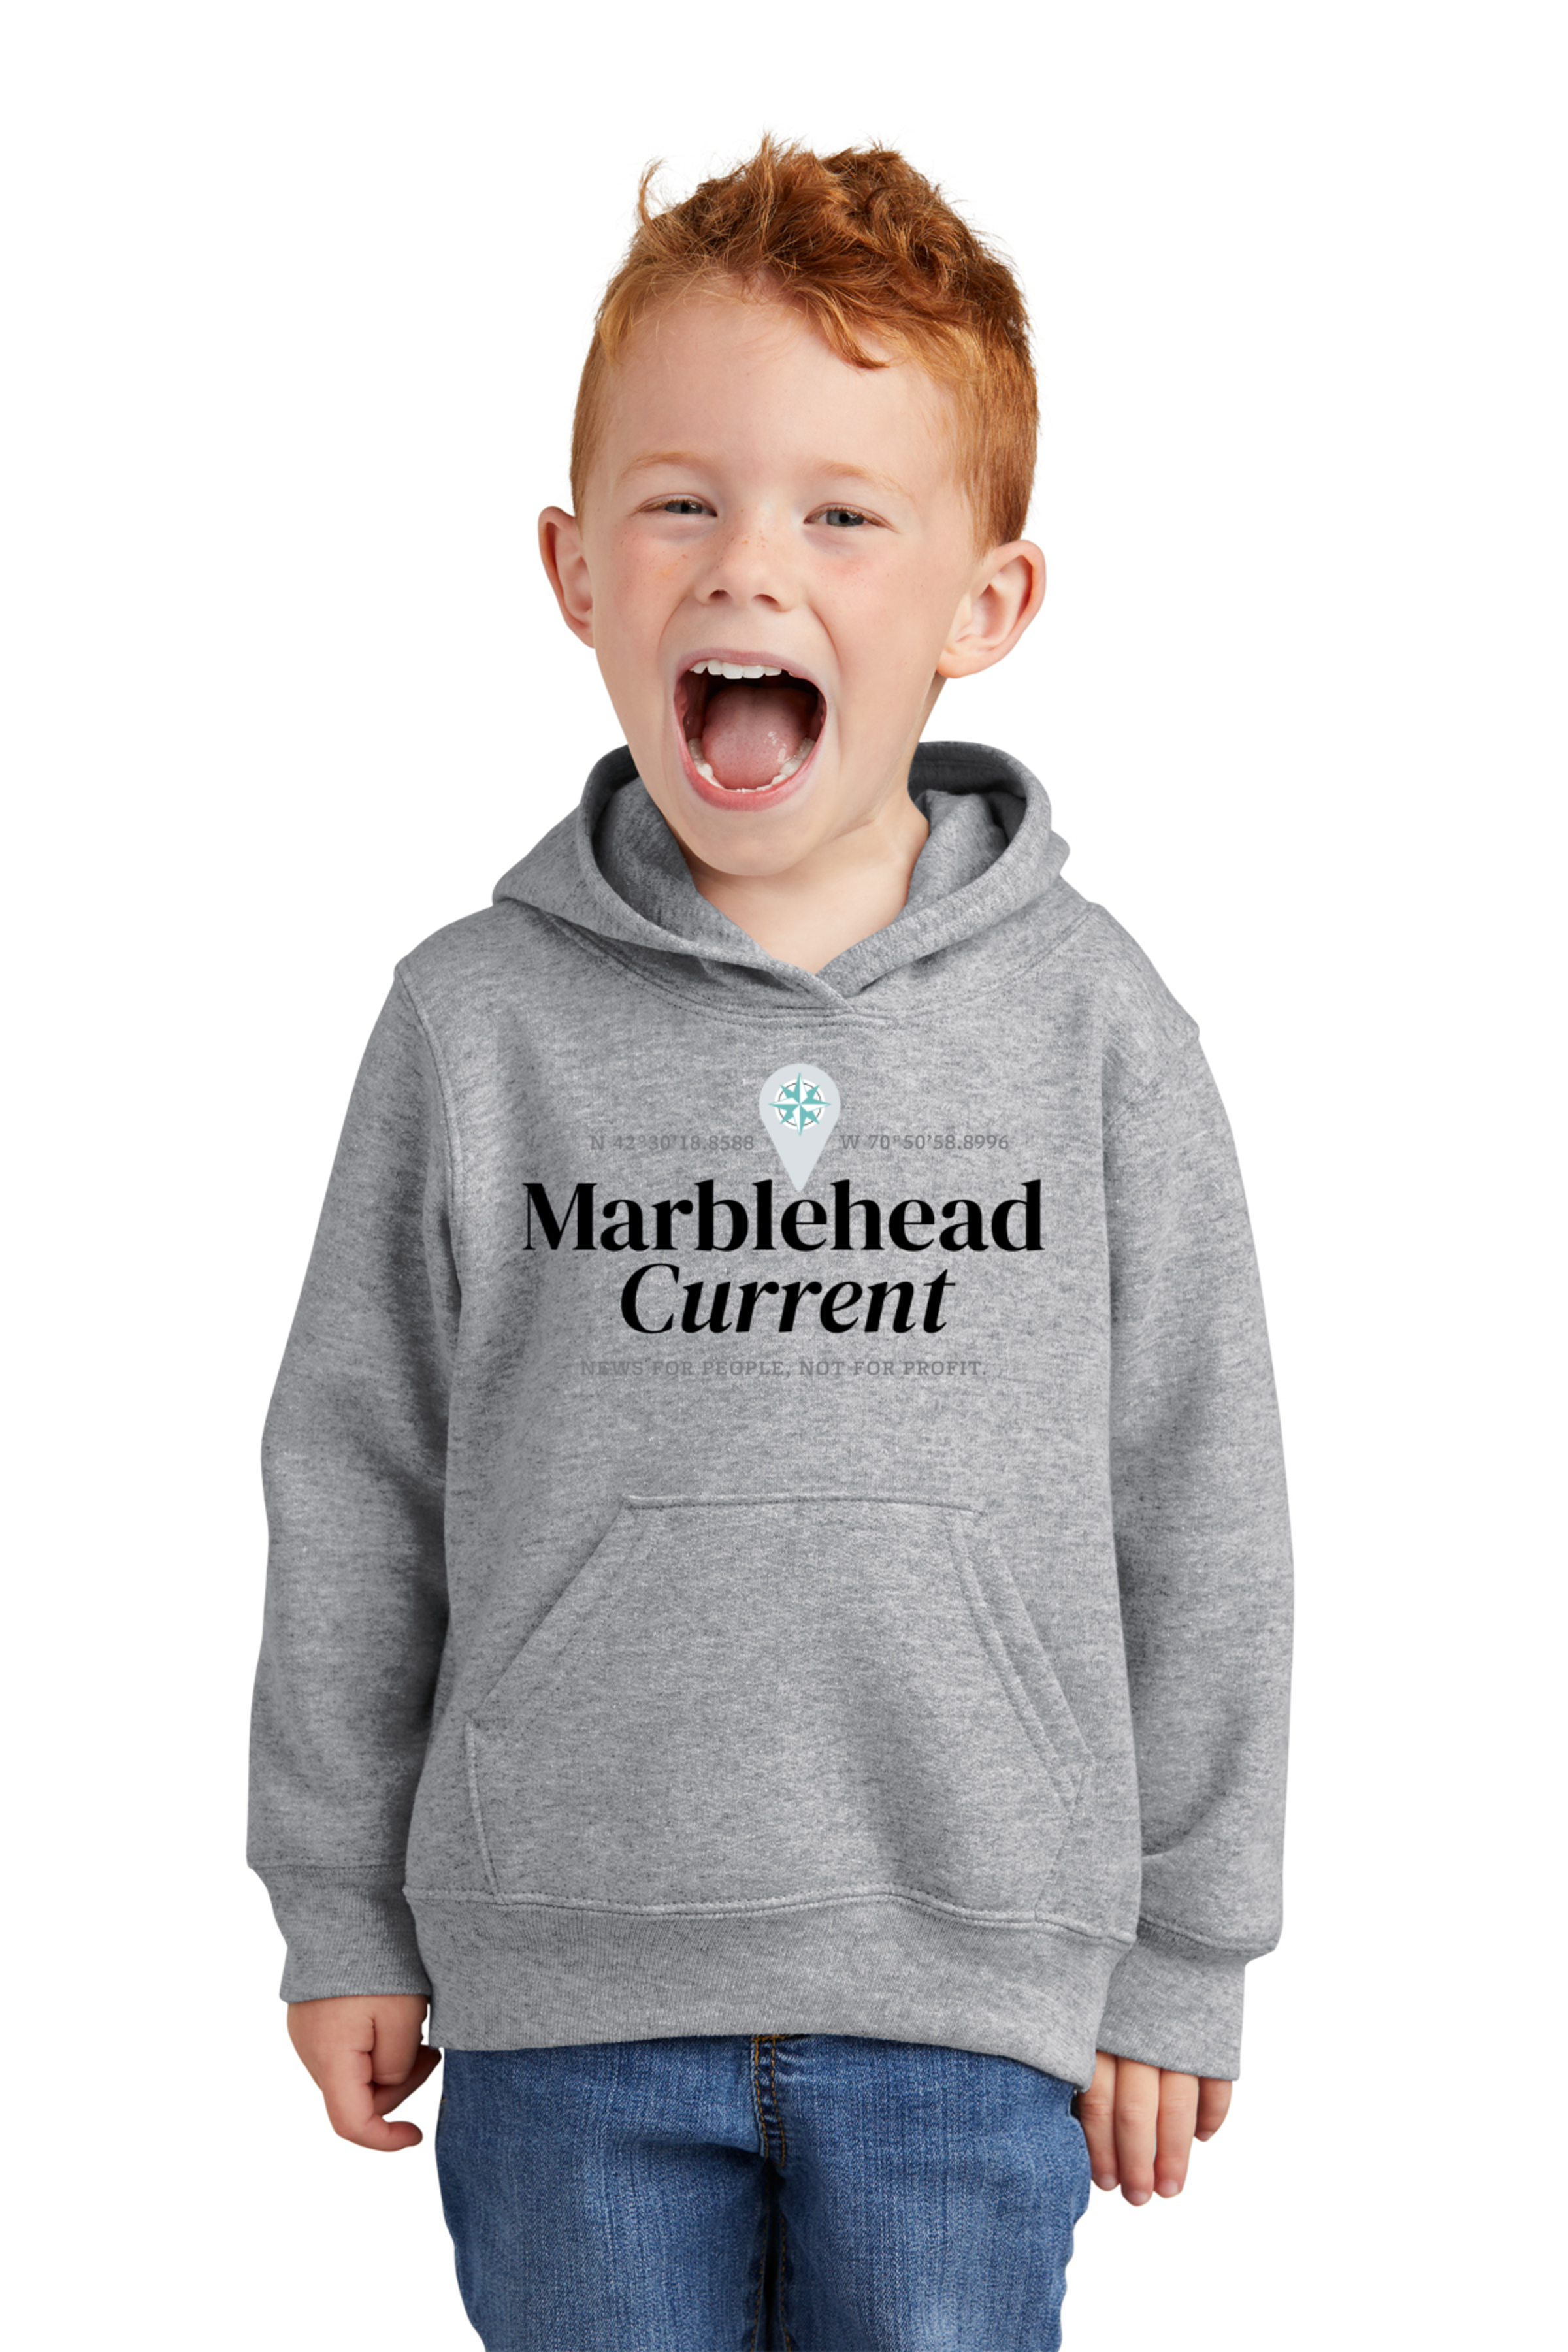 Marblehead Current Toddler Hoodie